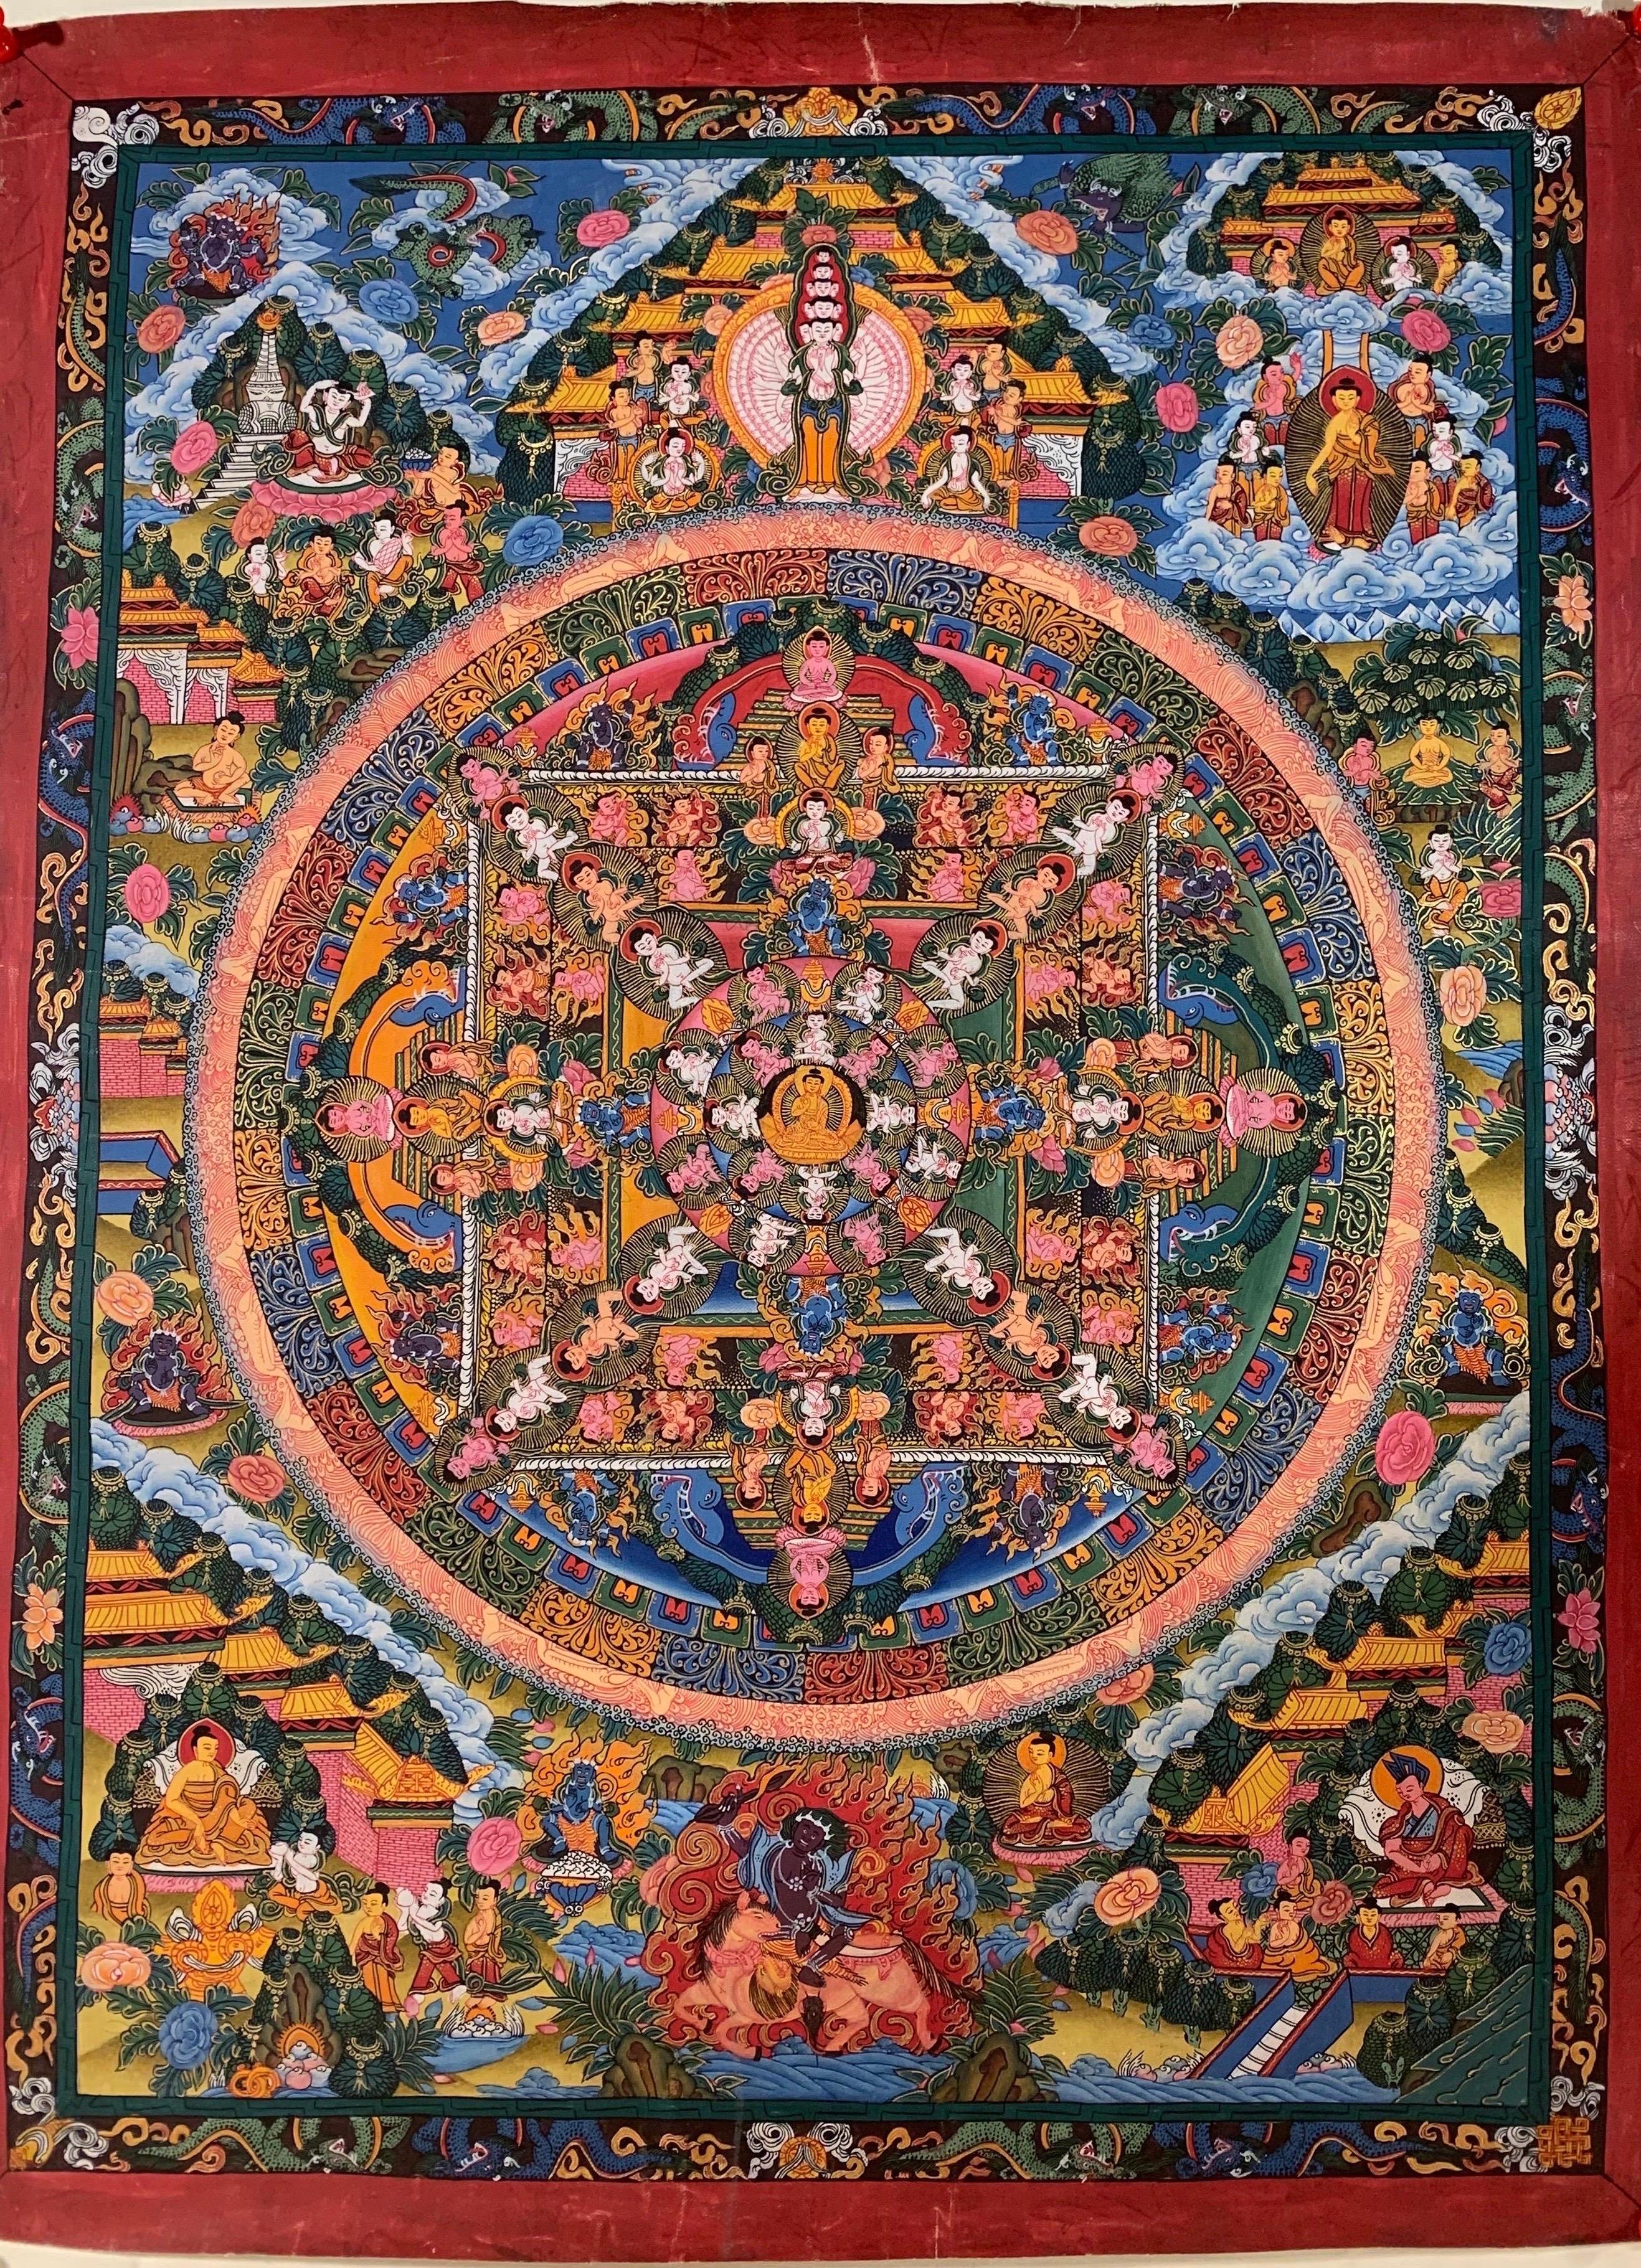 Single Mandala Original Thangka Painting on Canvas With Real 24 Karat Gold